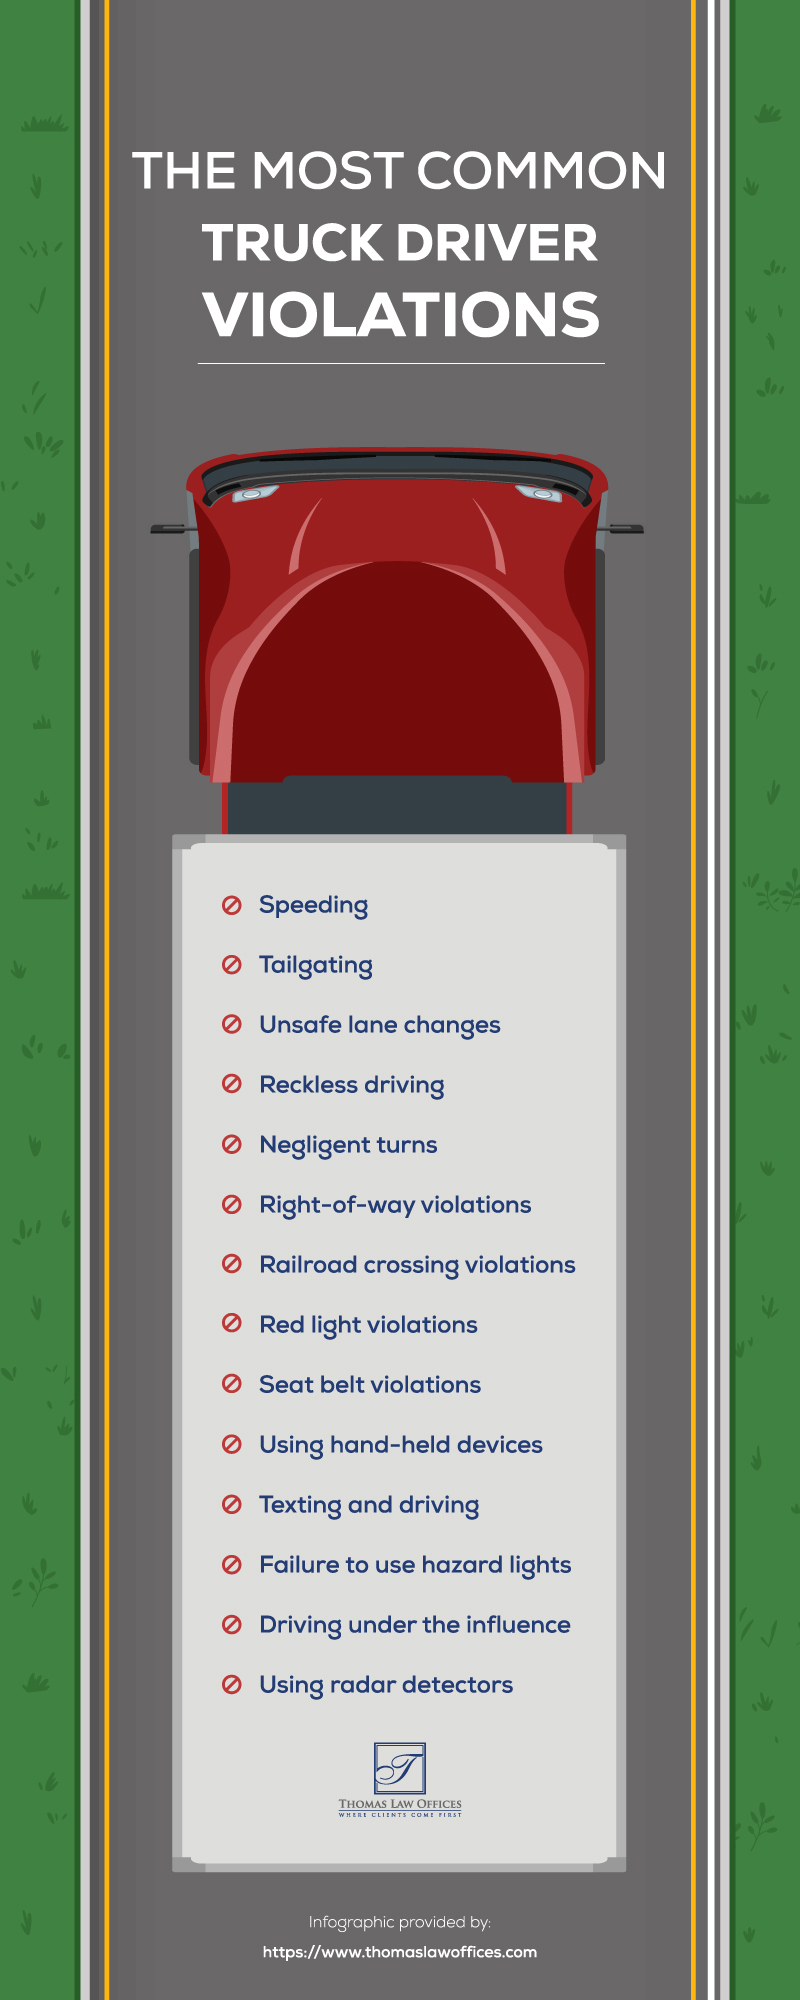 Truck driver violation infographic